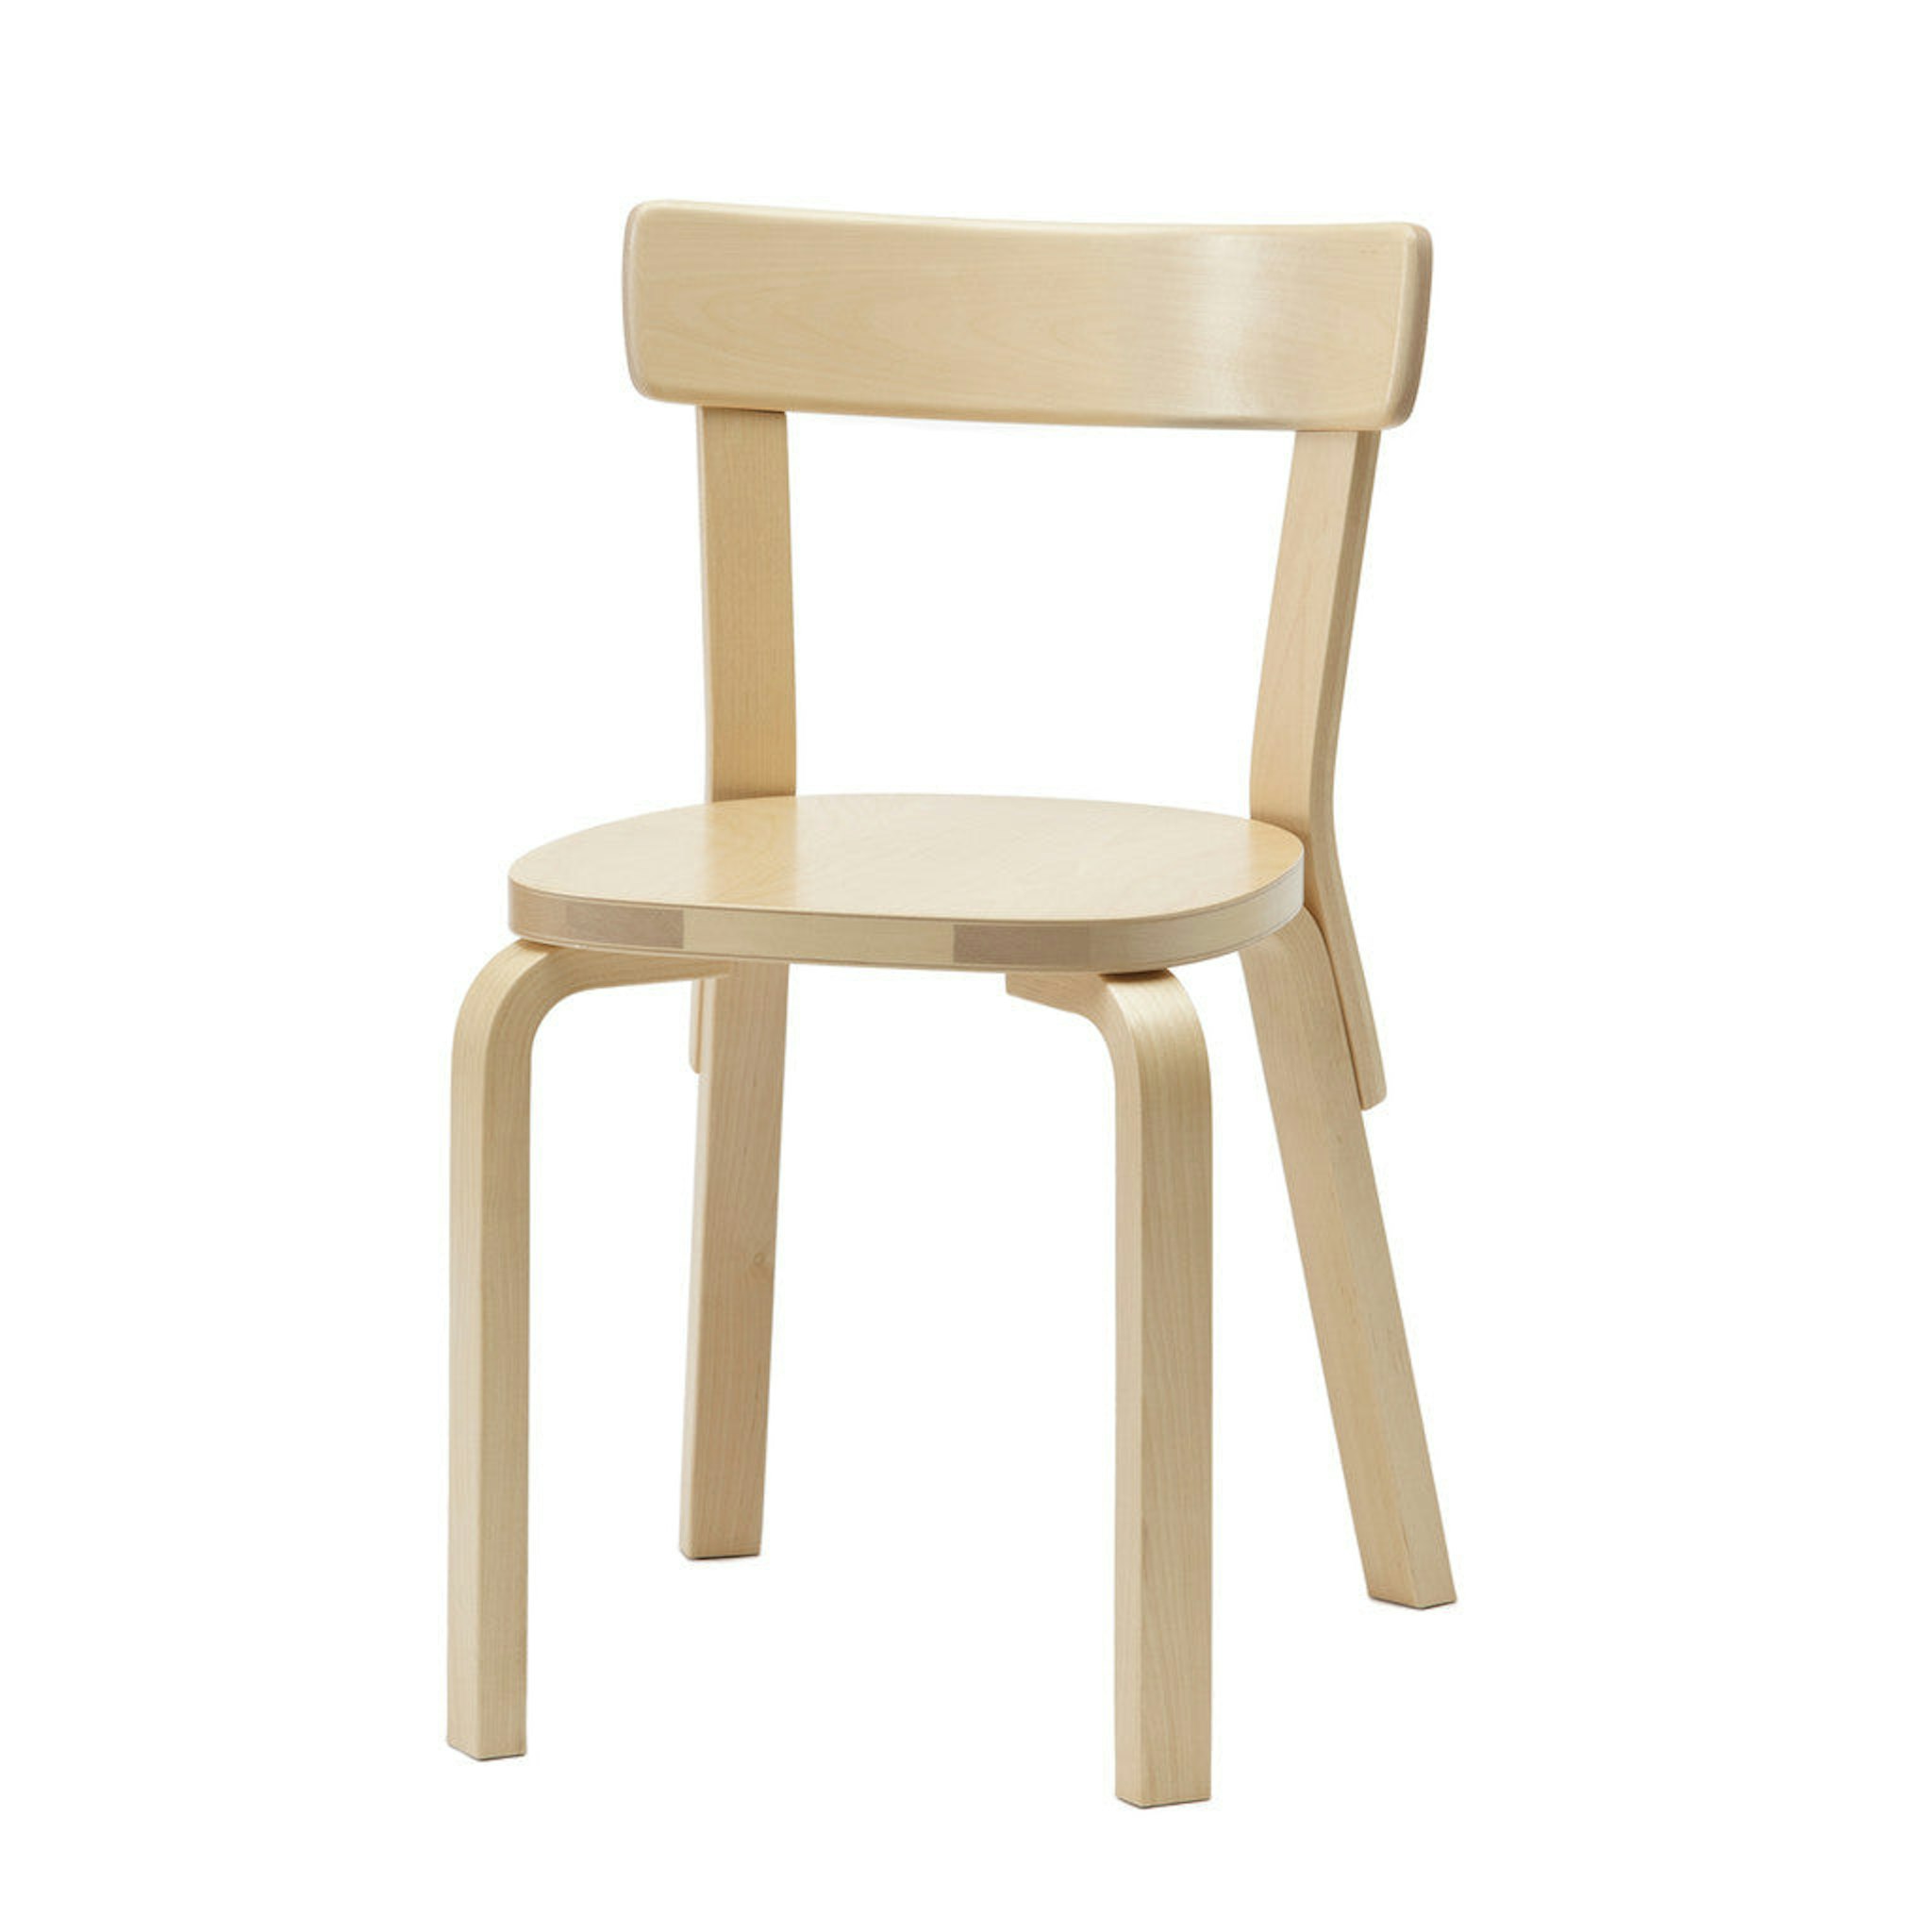 Chair 69 by Artek